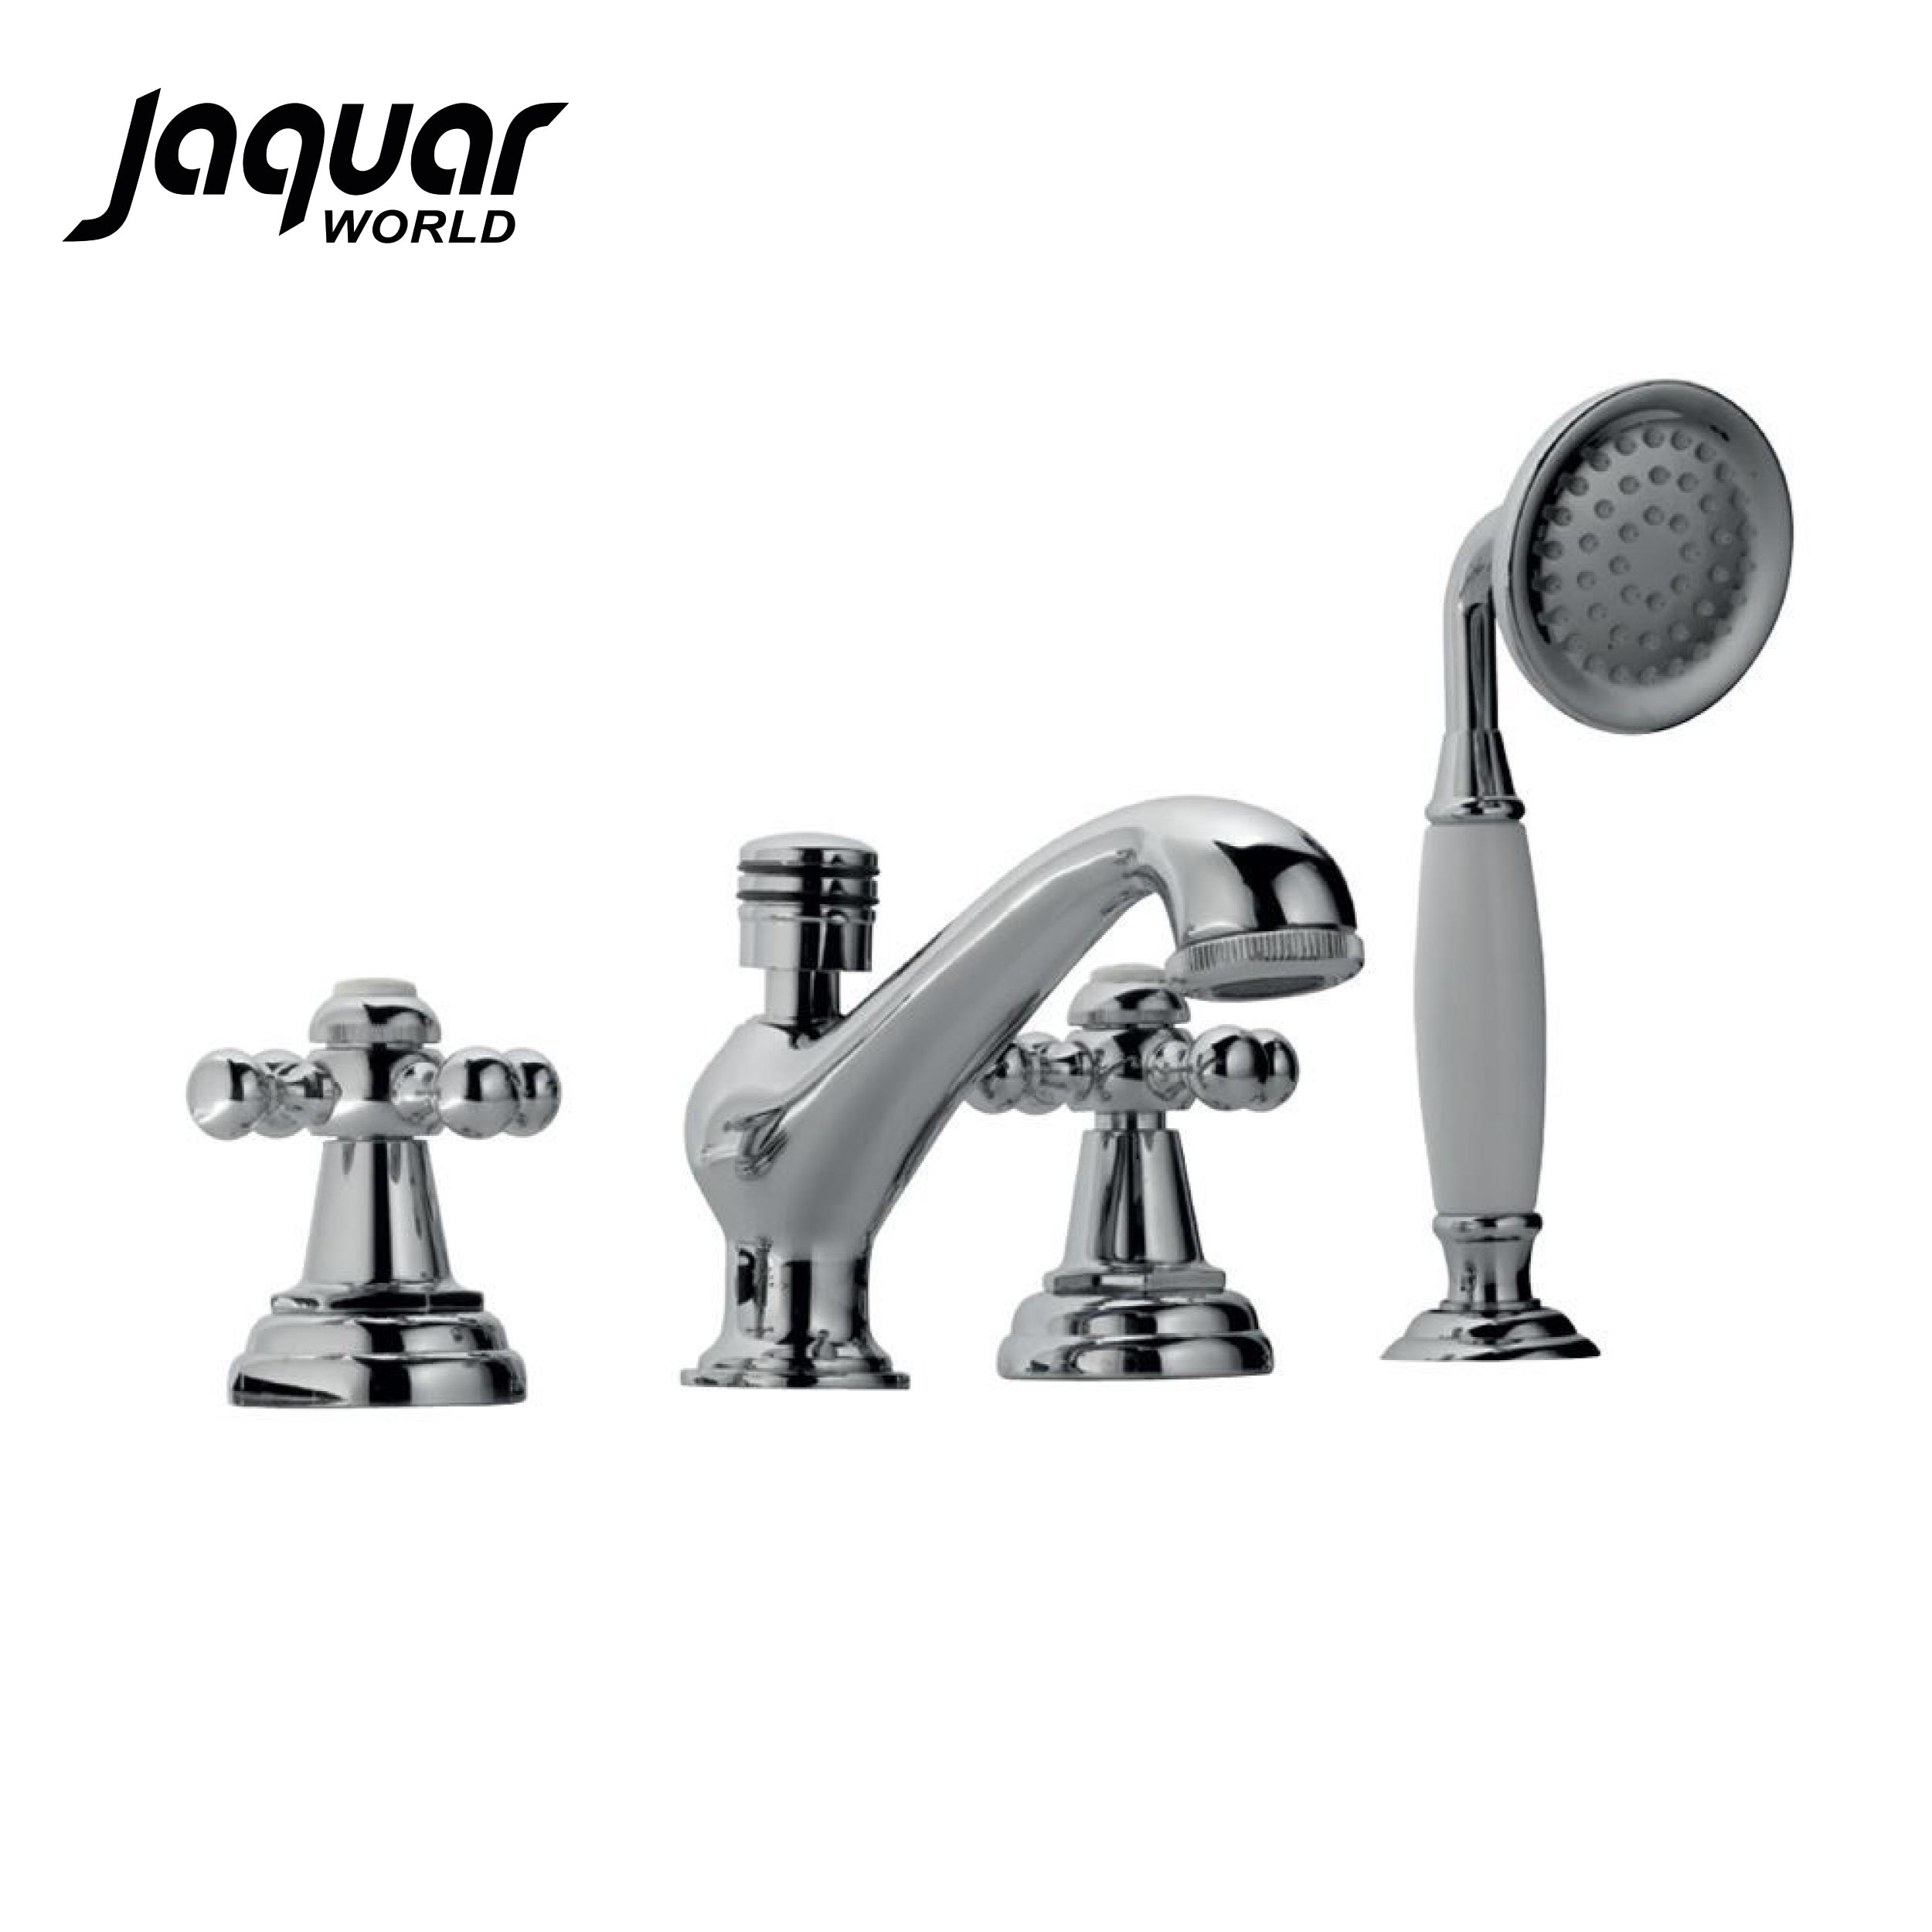 Jaquar bathroom accessories